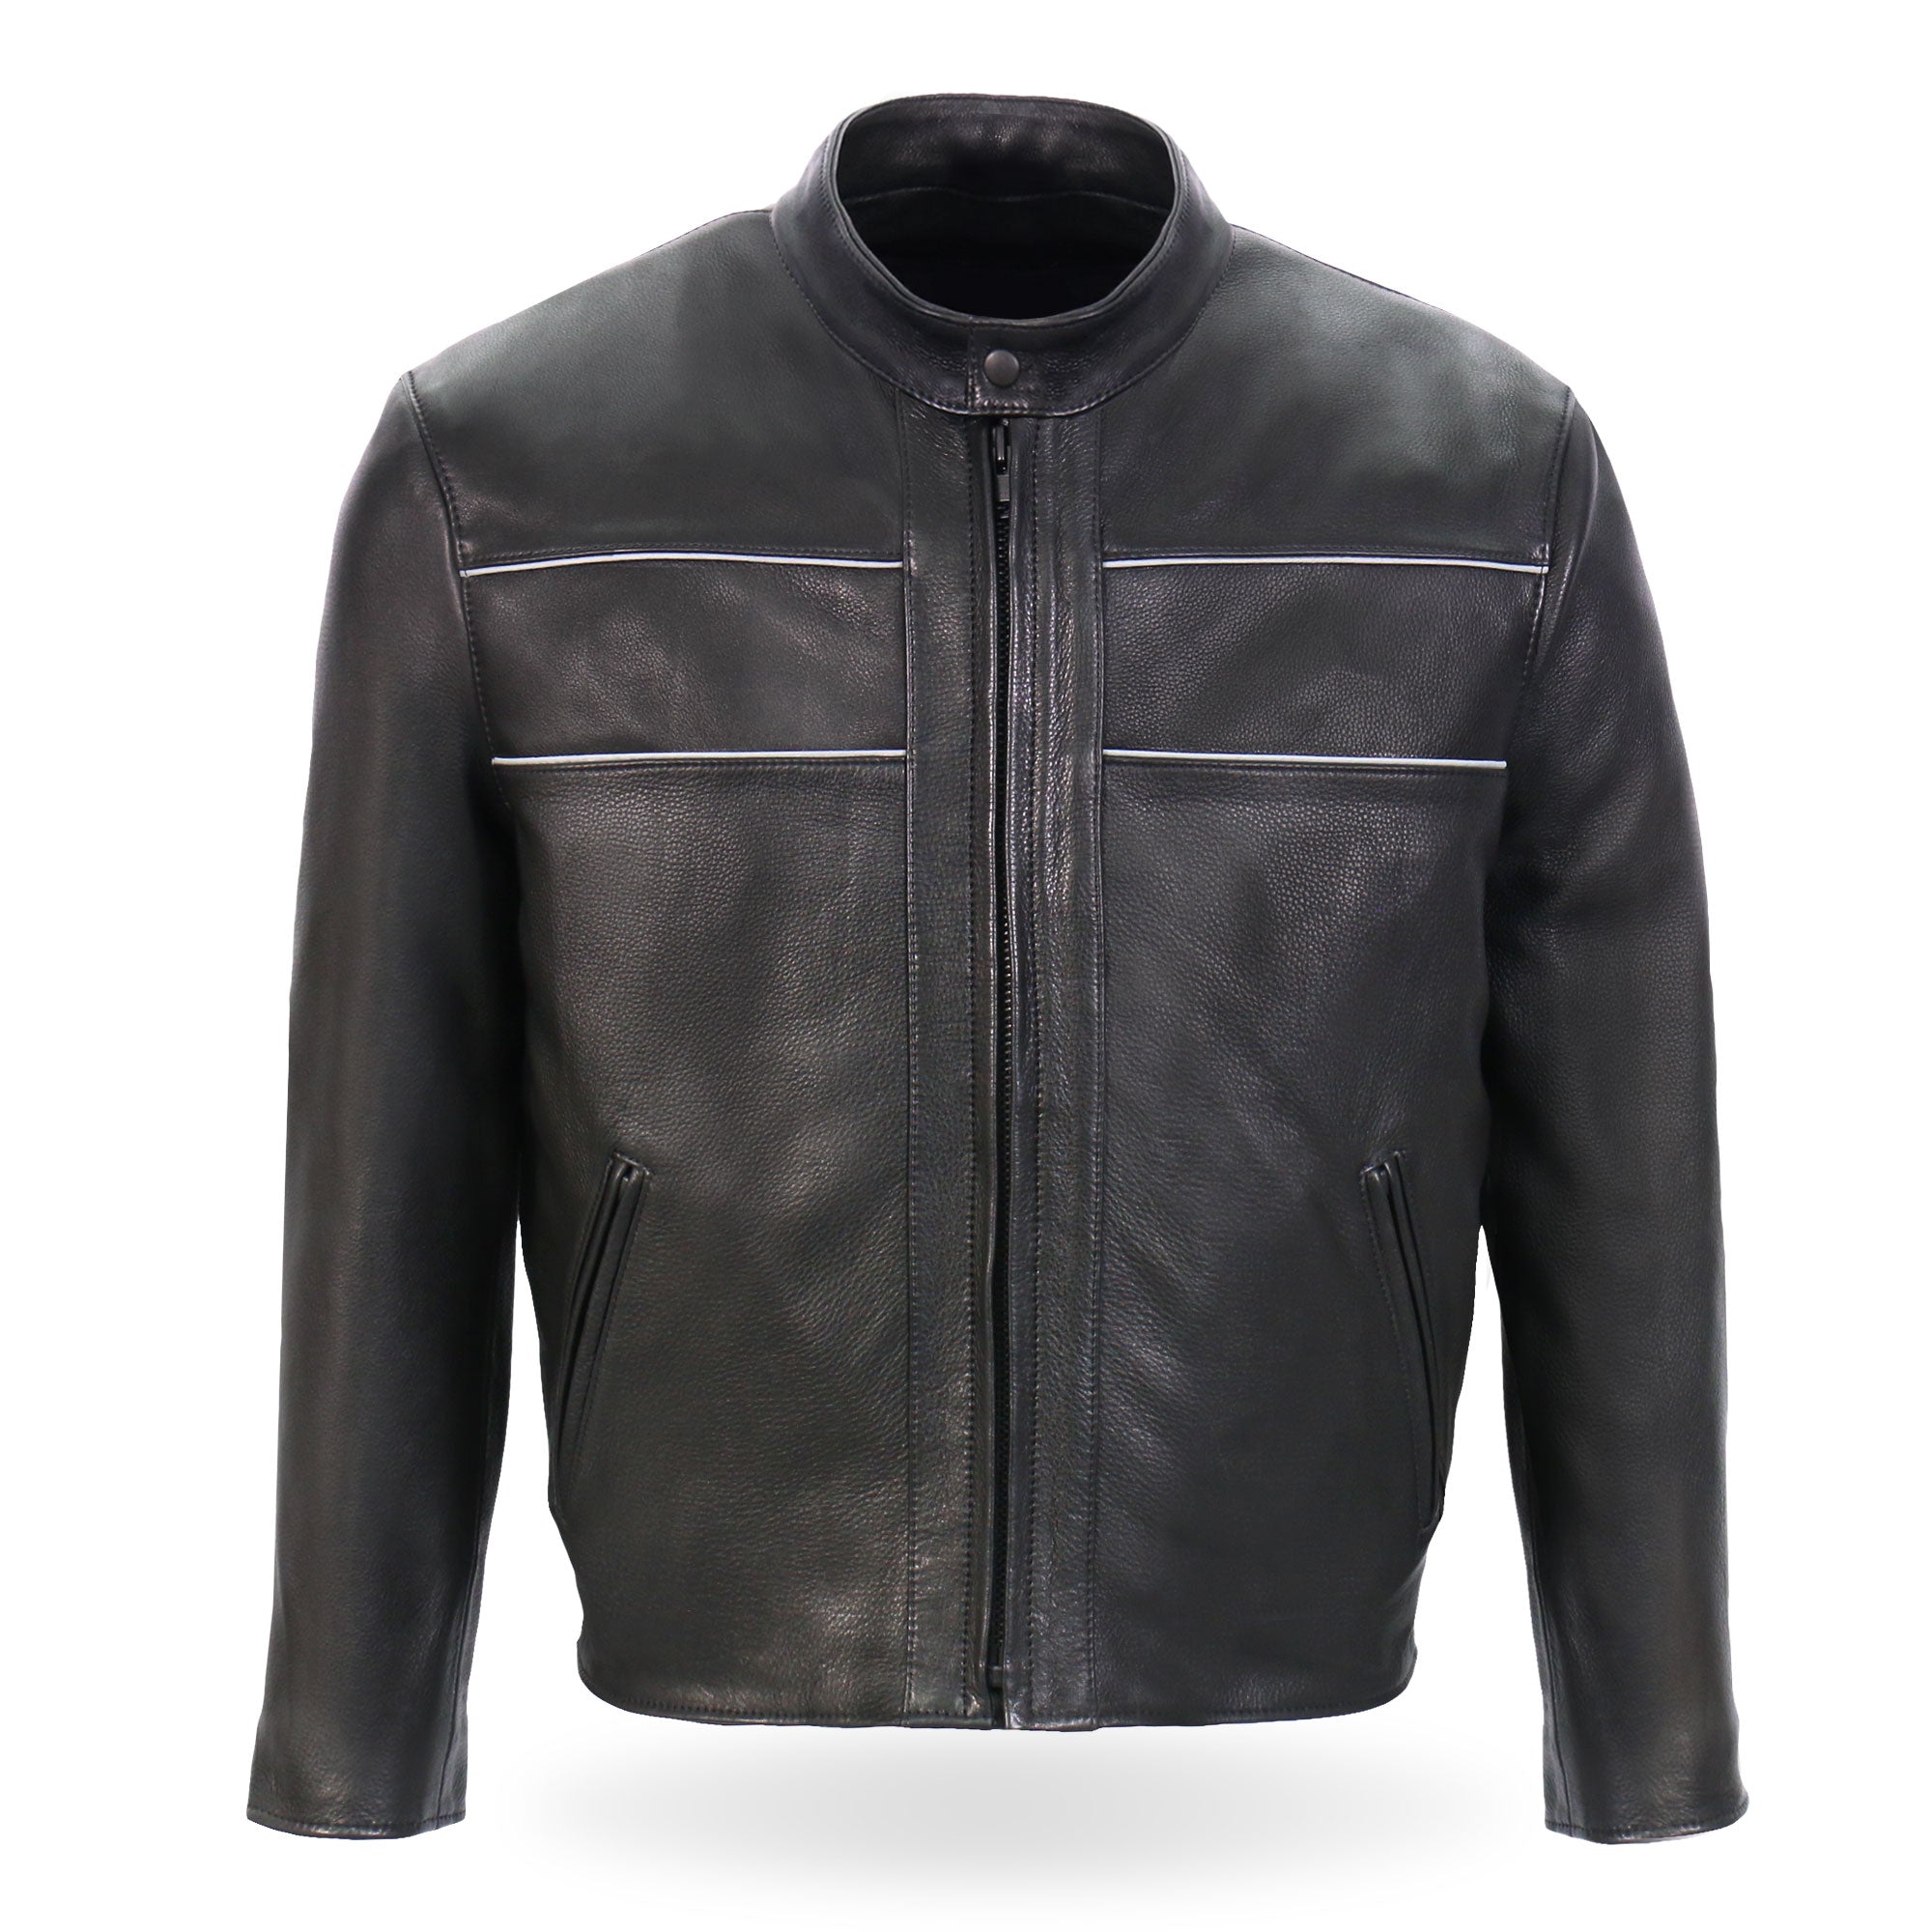 Hot Leathers JKM1032 Men’s Black ‘Skull Flag' Printed Leather Jacket with Concealed Carry Pockets - Black / Medium